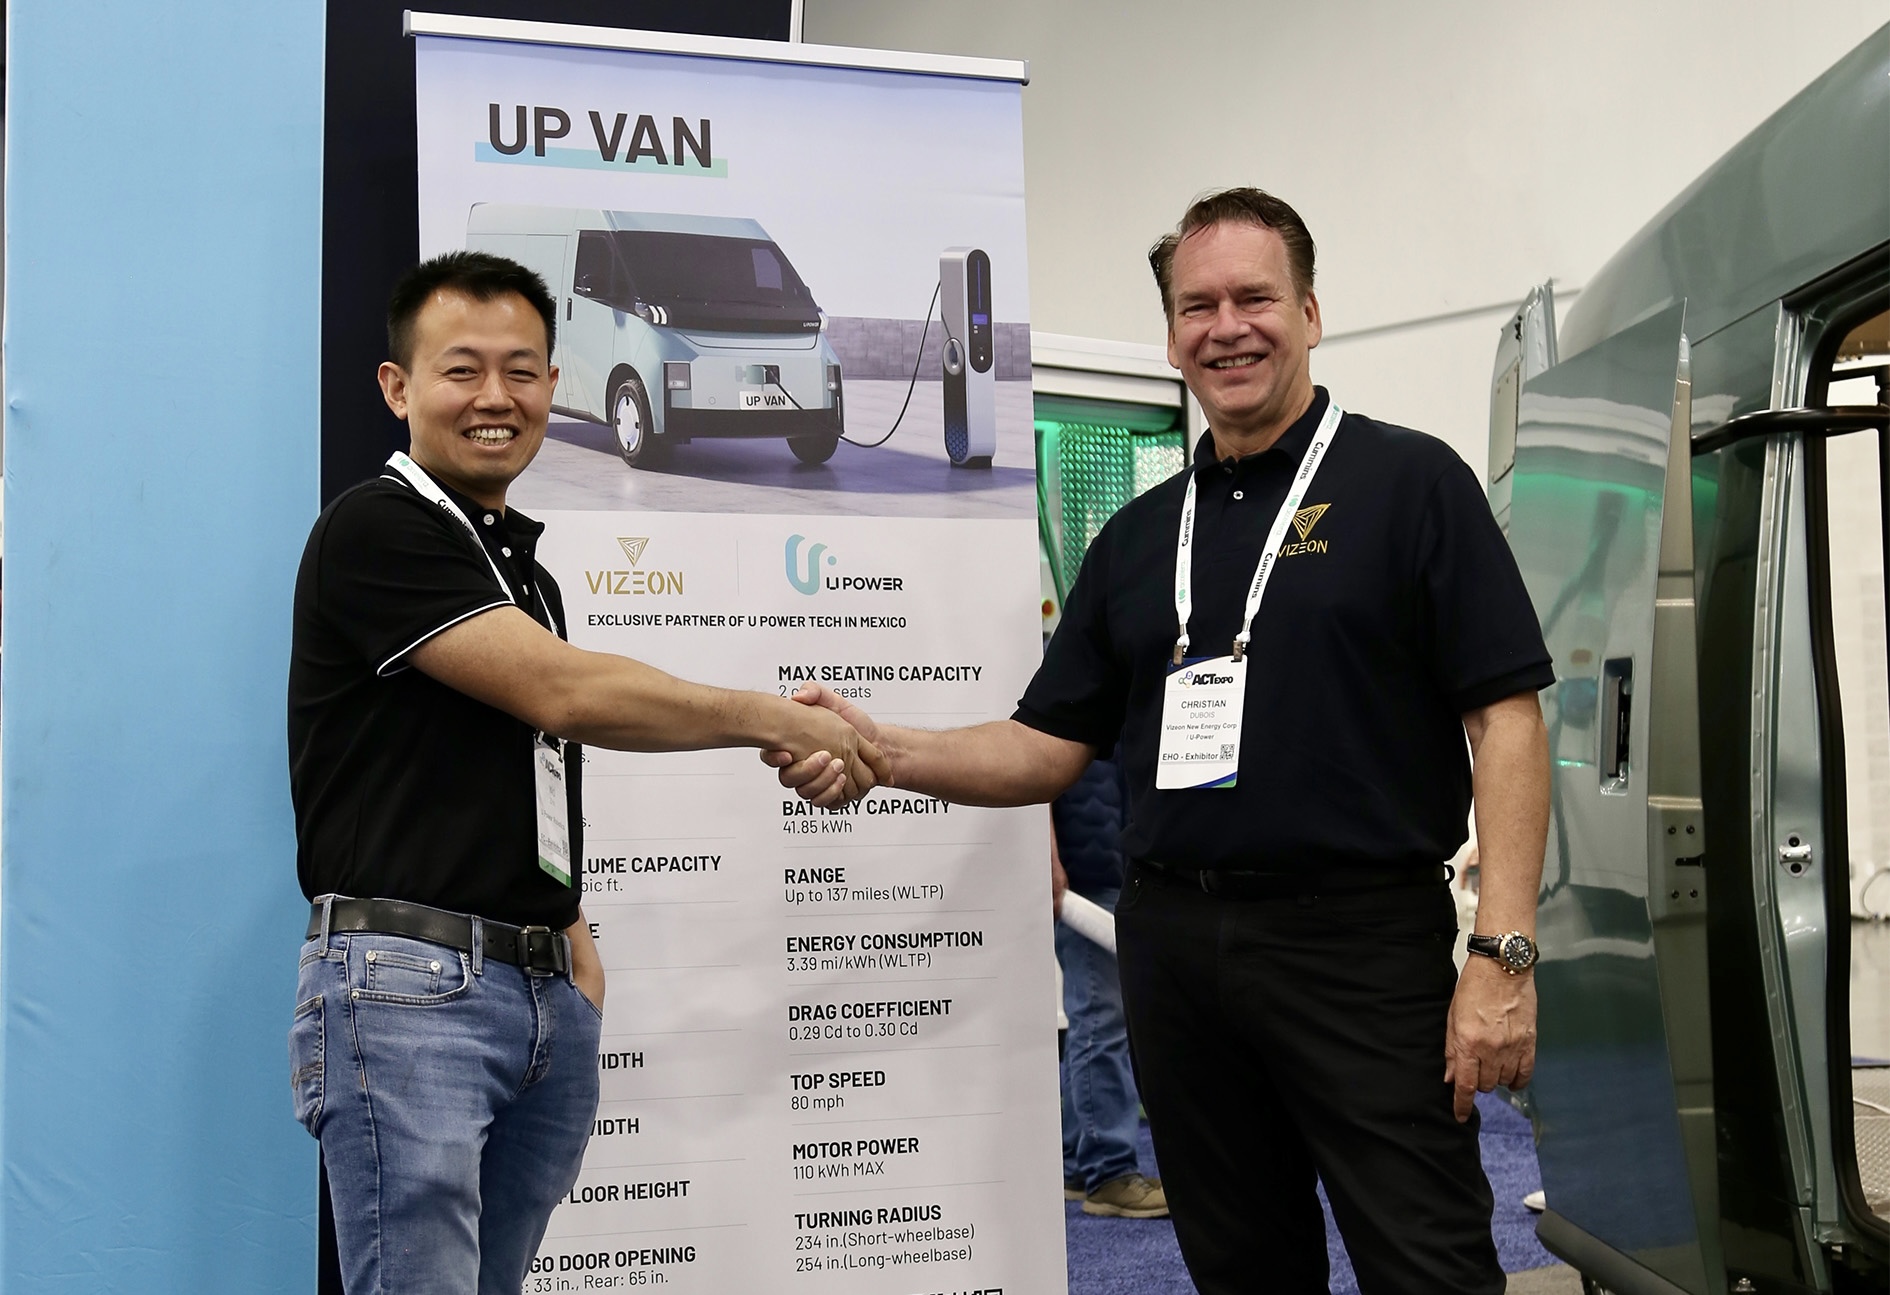 Yao Zhai, Head of U POWER Tech U.S., and Christian Dubois, CEO of VIZEON